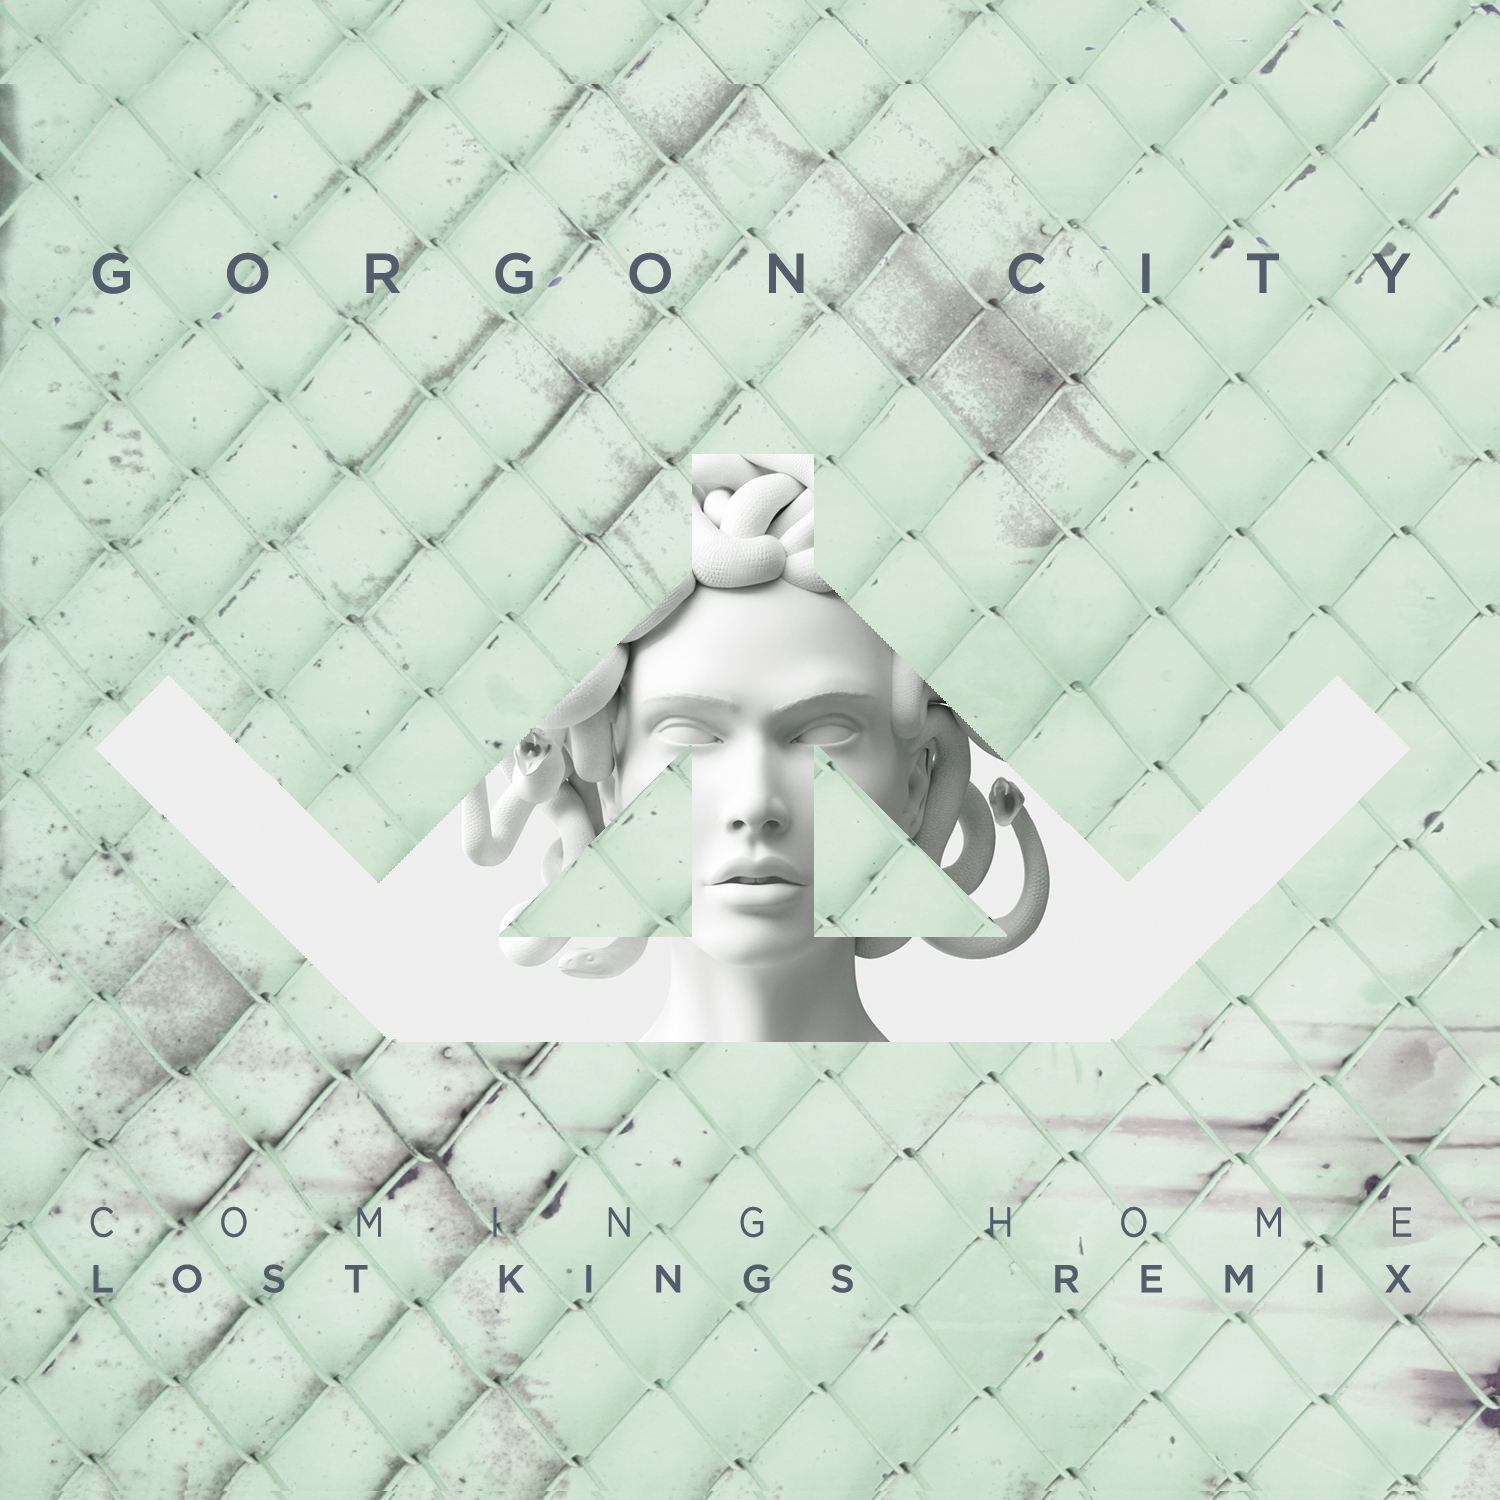 GorgonCity